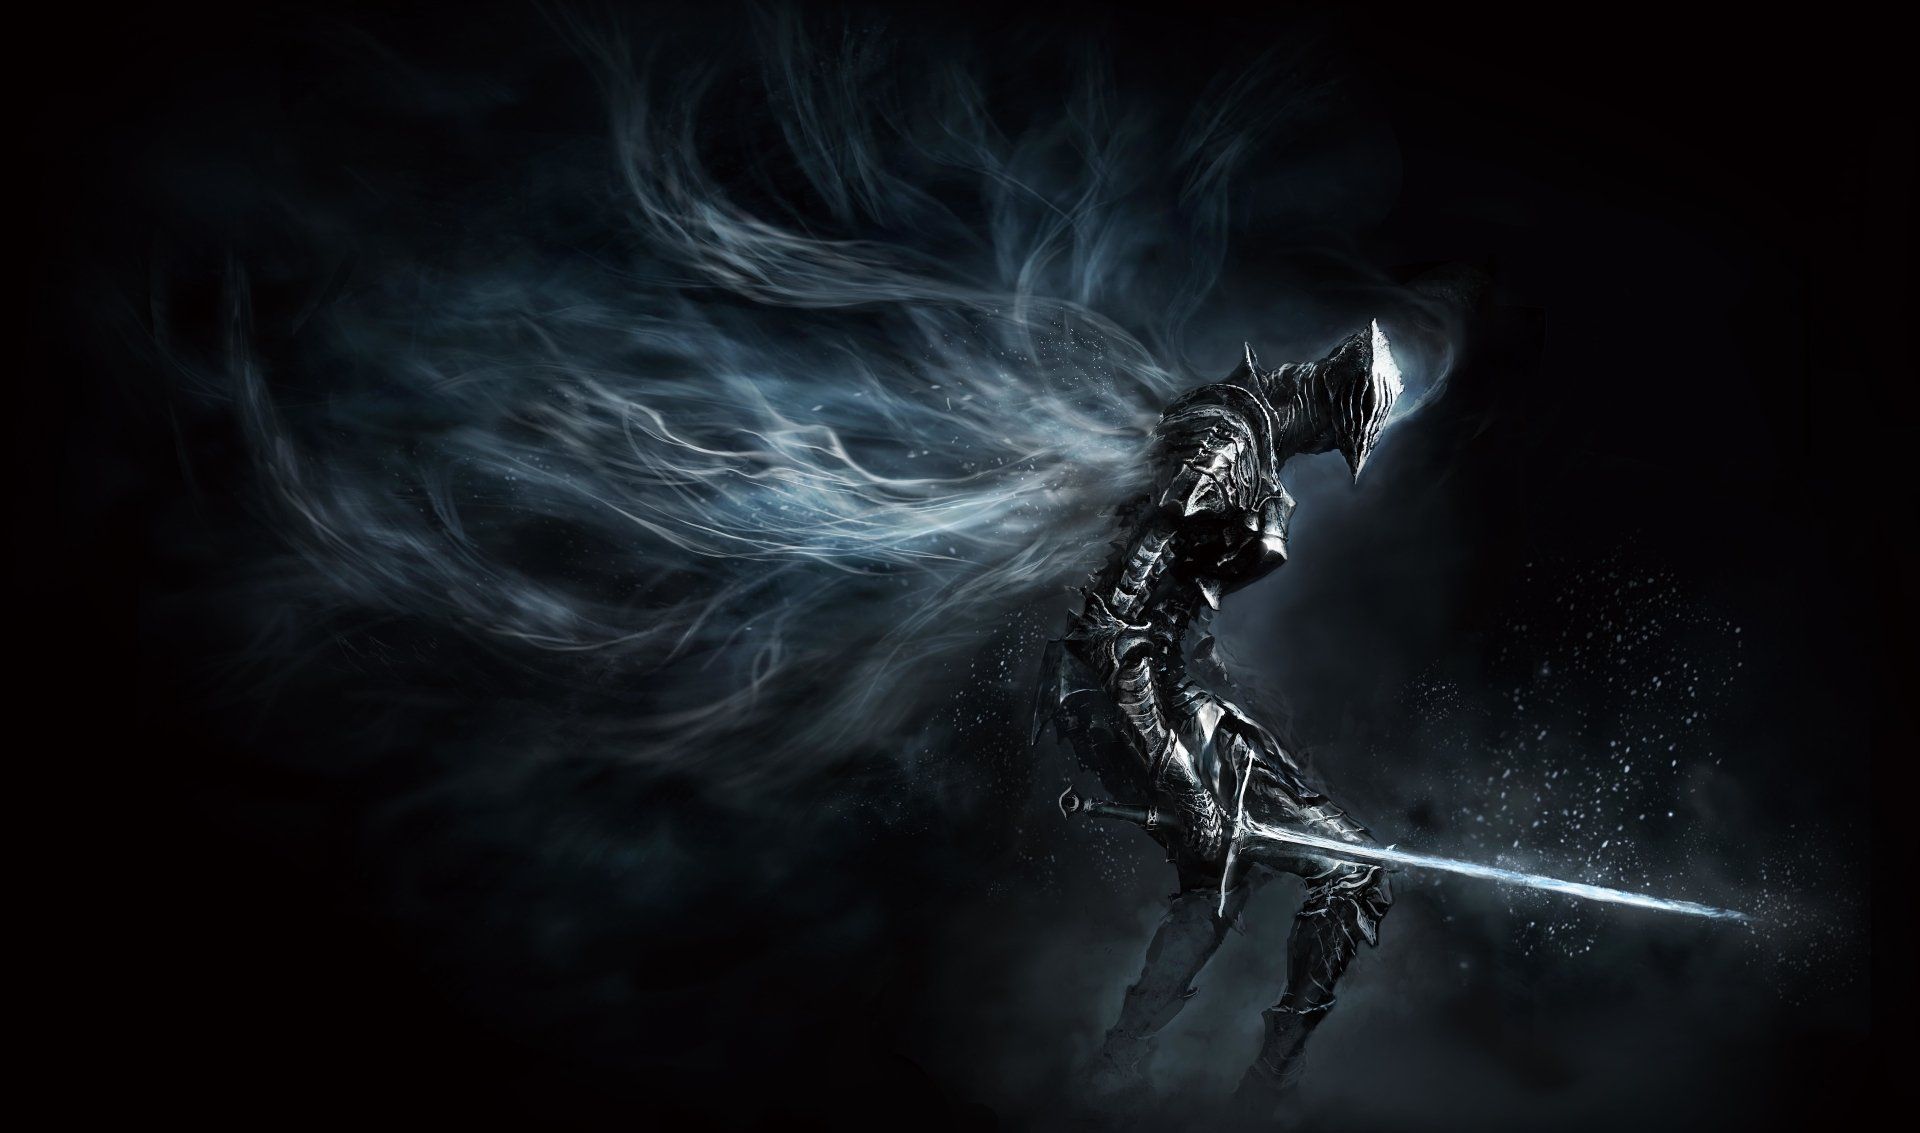 4K Ultra HD Dark Souls III Wallpaper and Background Image